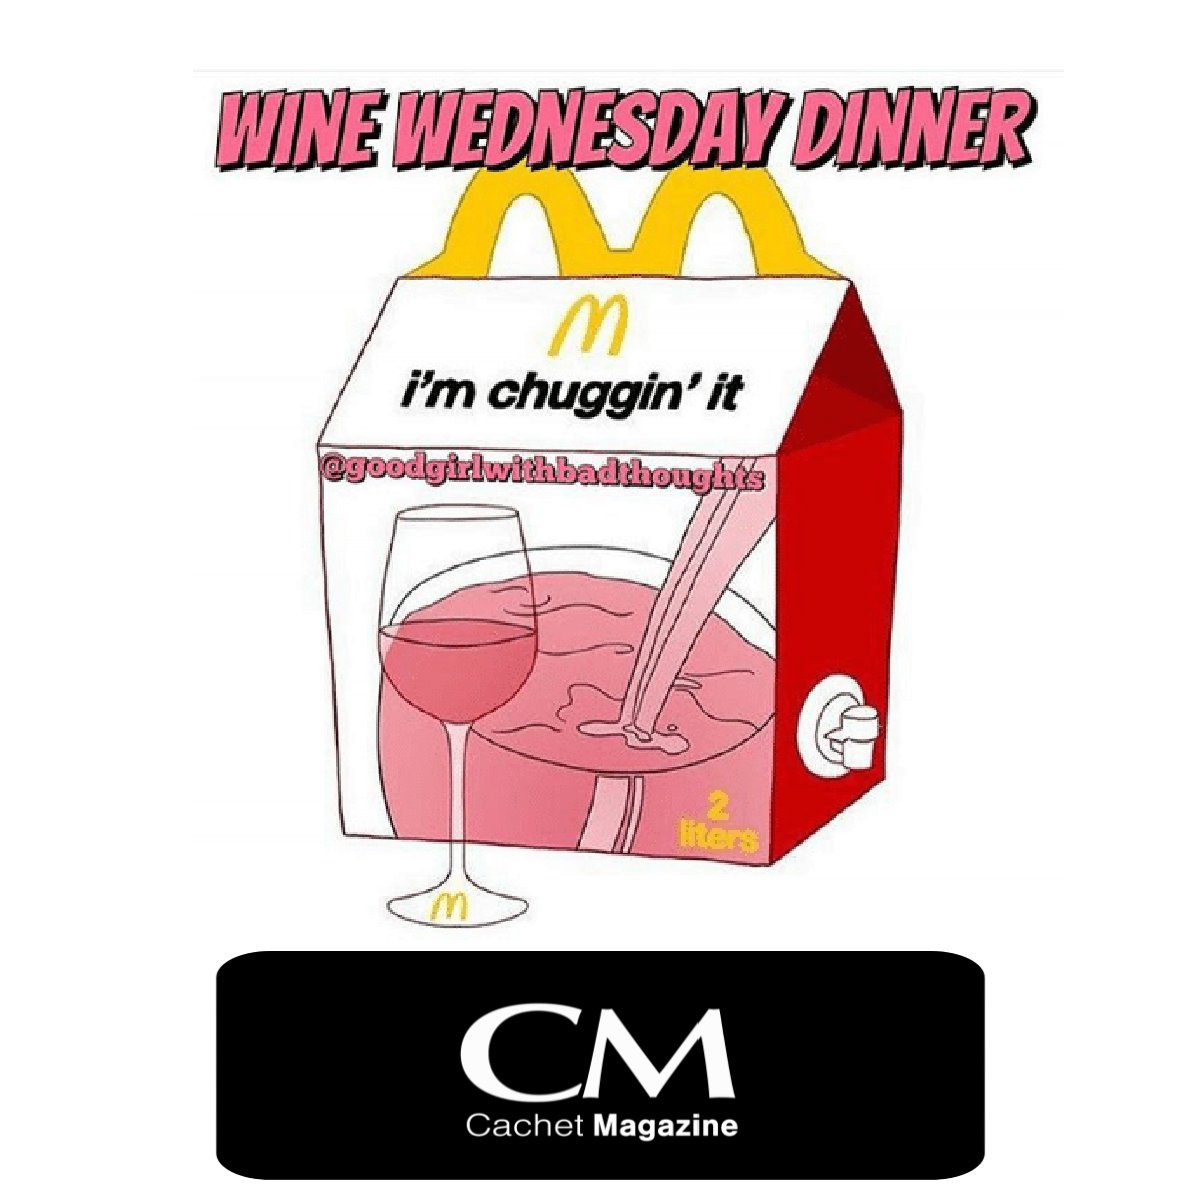 🎄 WINE WEDNESDAY DINNER i'm chuggin' it - CM Cachet Magazine  😆

#winewednesday #cachetmagwinewednesday #cachetwinewednesday